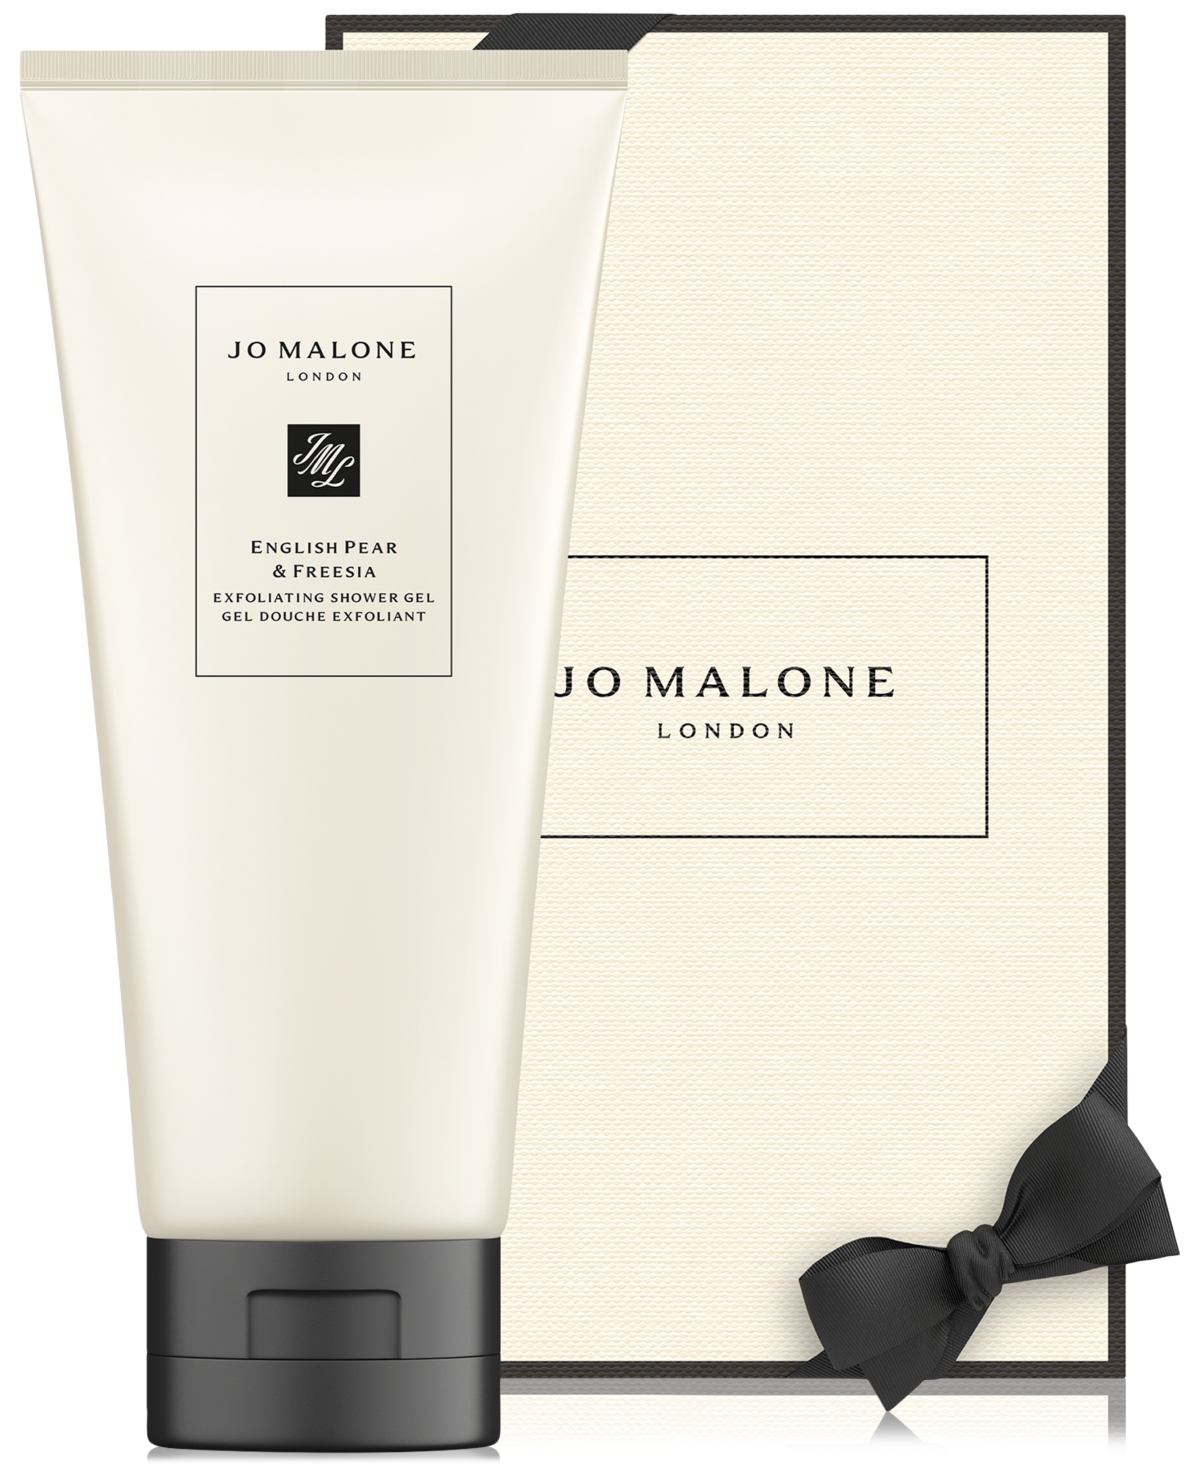 Jo Malone London English Pear & Freesia Exfoliating Shower Gel, 6.7 Oz. In White